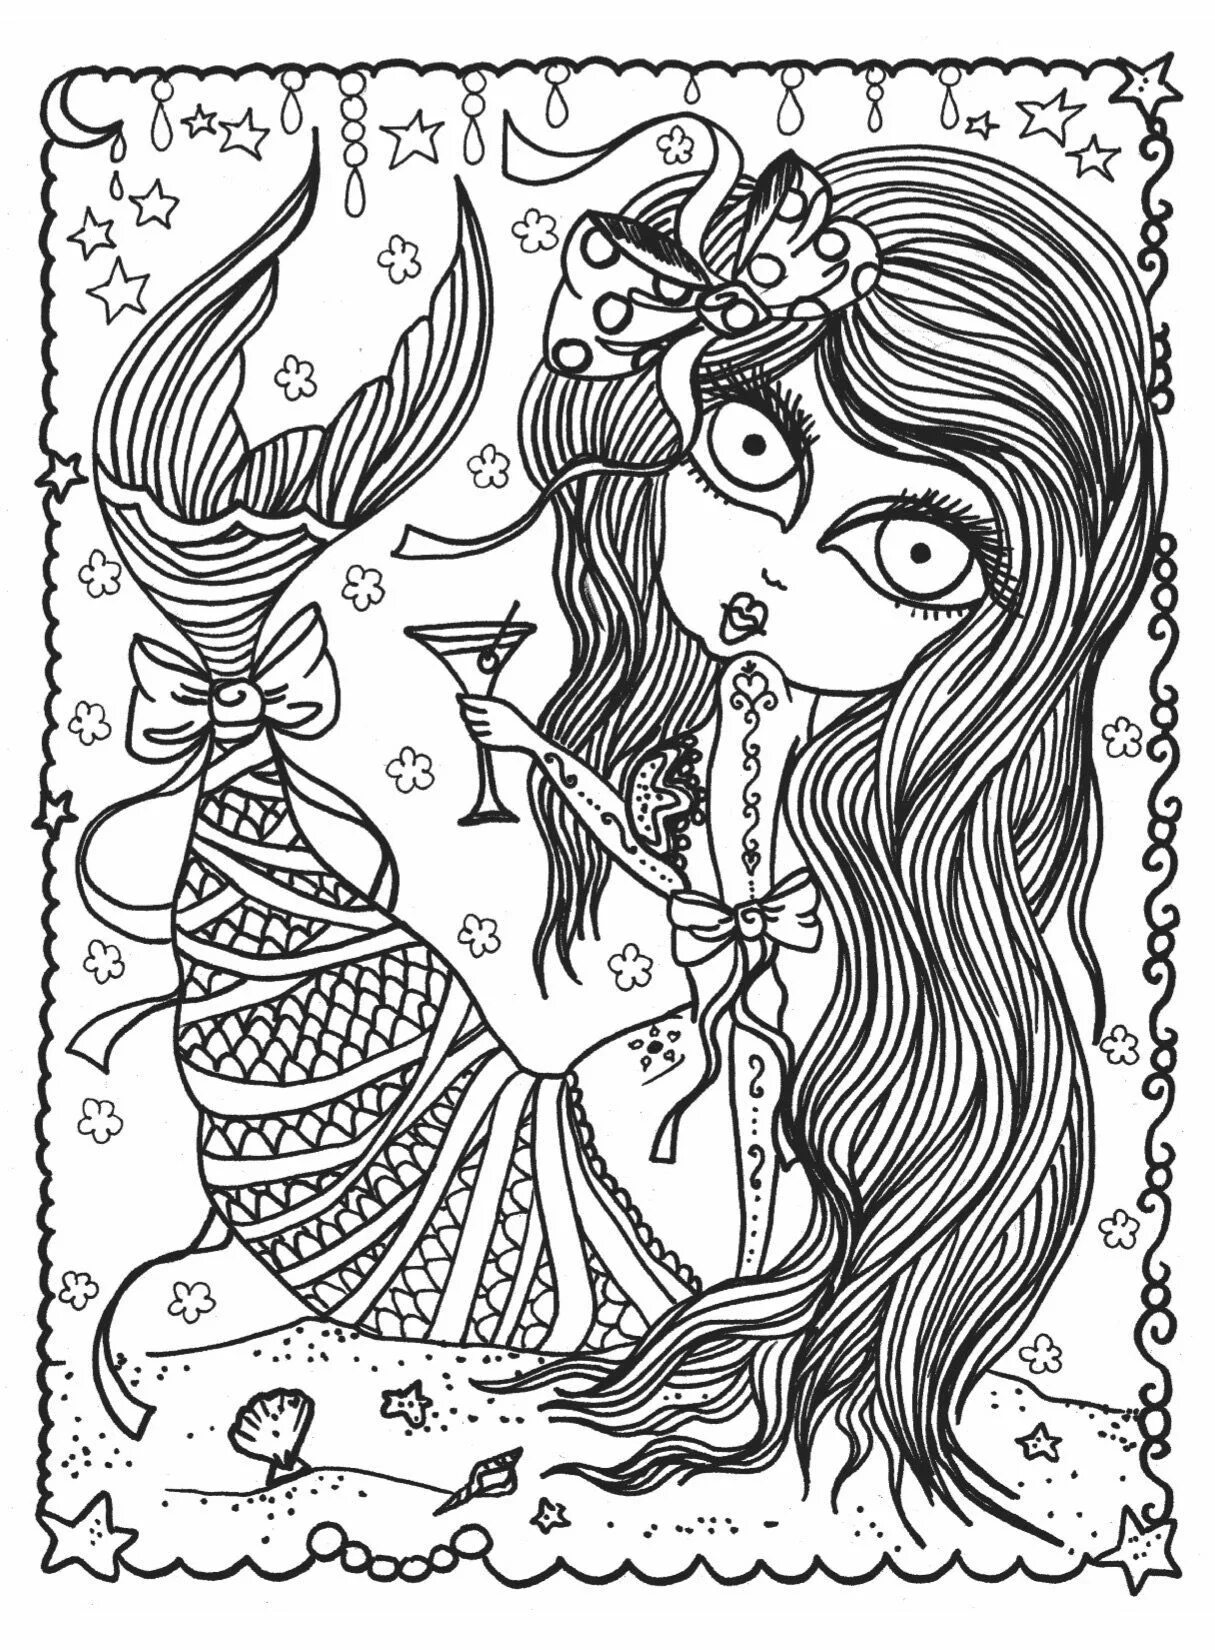 Complex mermaid #5